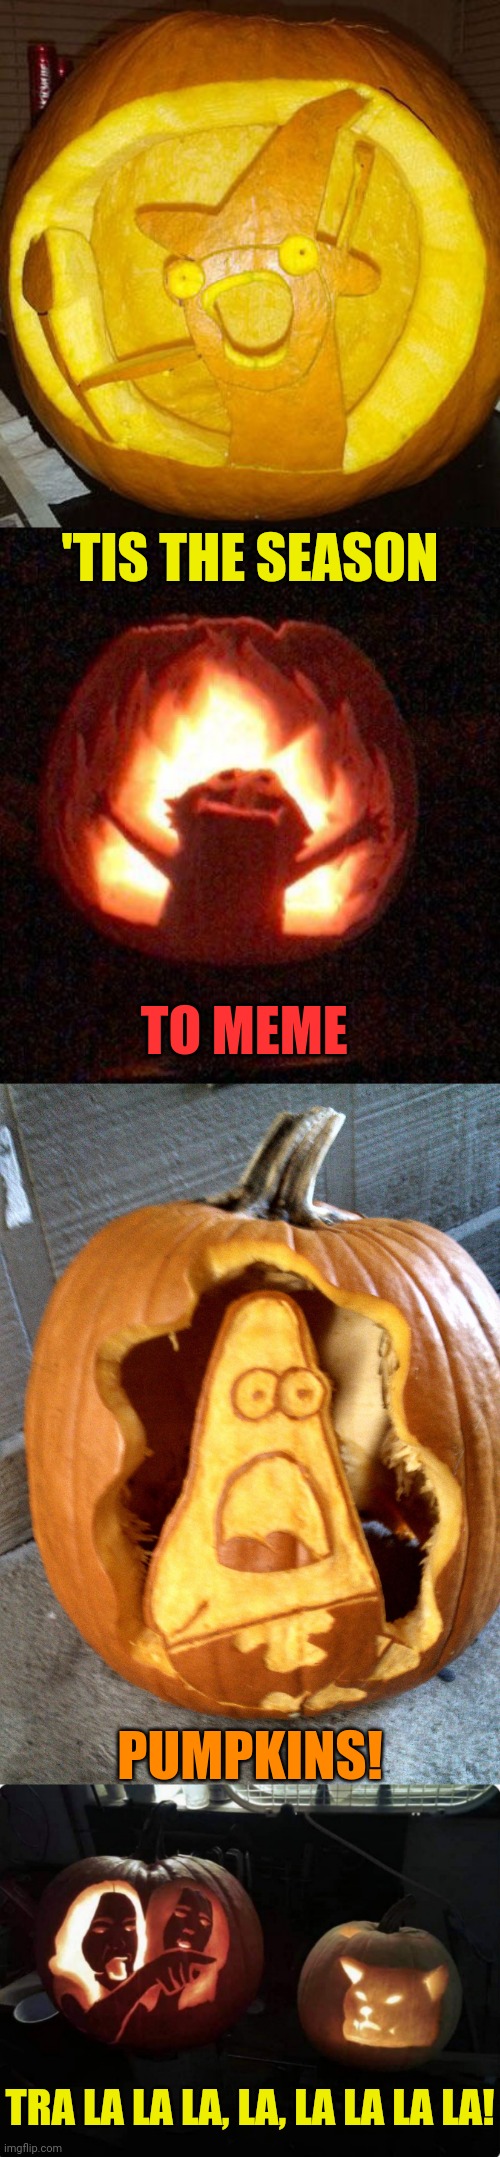 Memeing Pumpkins | 'TIS THE SEASON; TO MEME; PUMPKINS! TRA LA LA LA, LA, LA LA LA LA! | image tagged in meme,pumpkins,art,halloween is coming | made w/ Imgflip meme maker